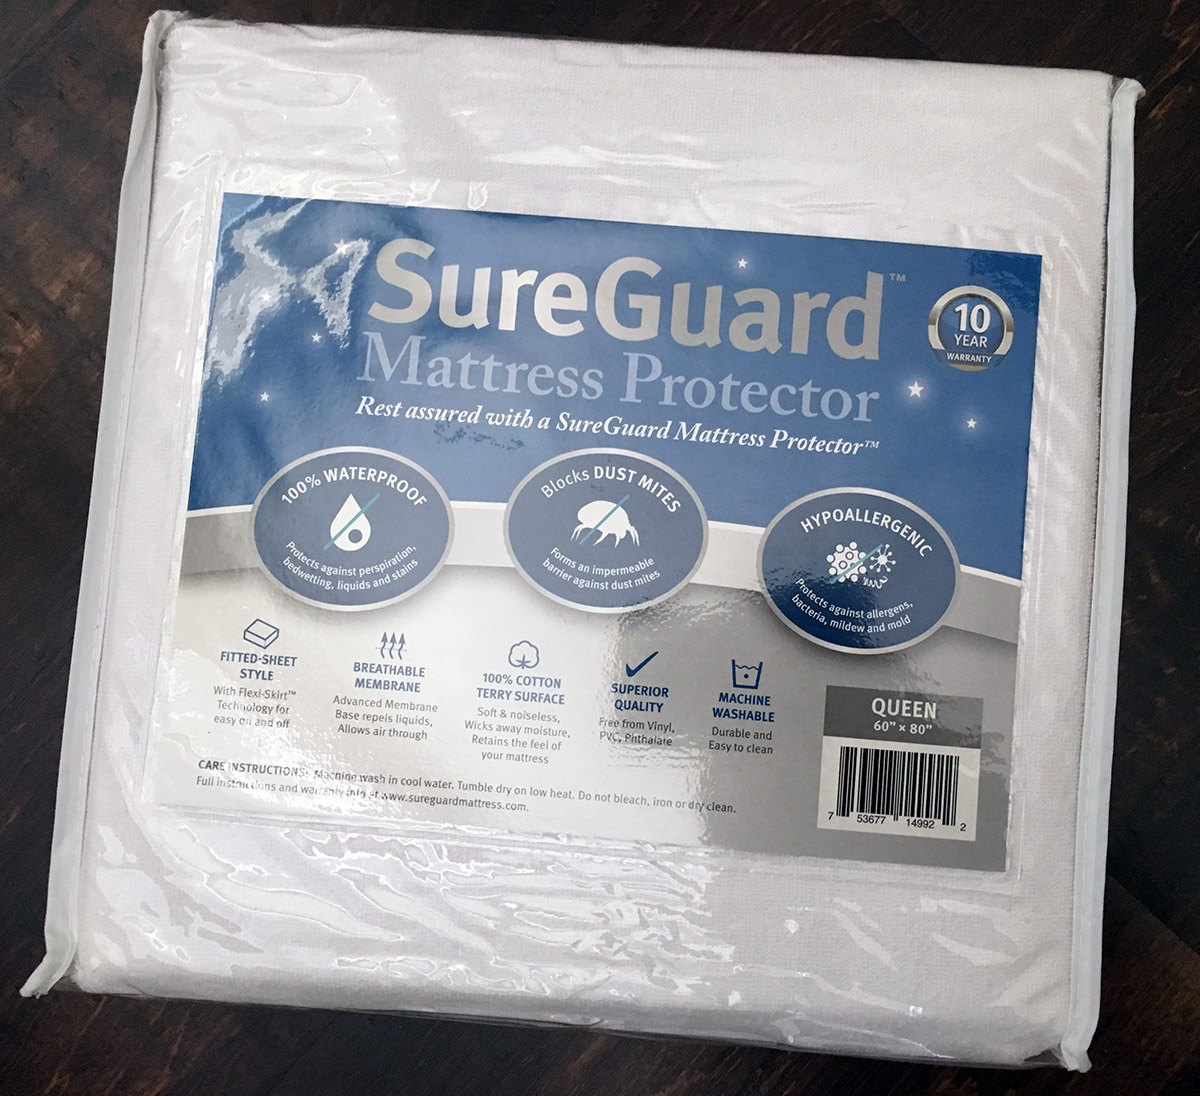 SureGuard Mattress Protector Review